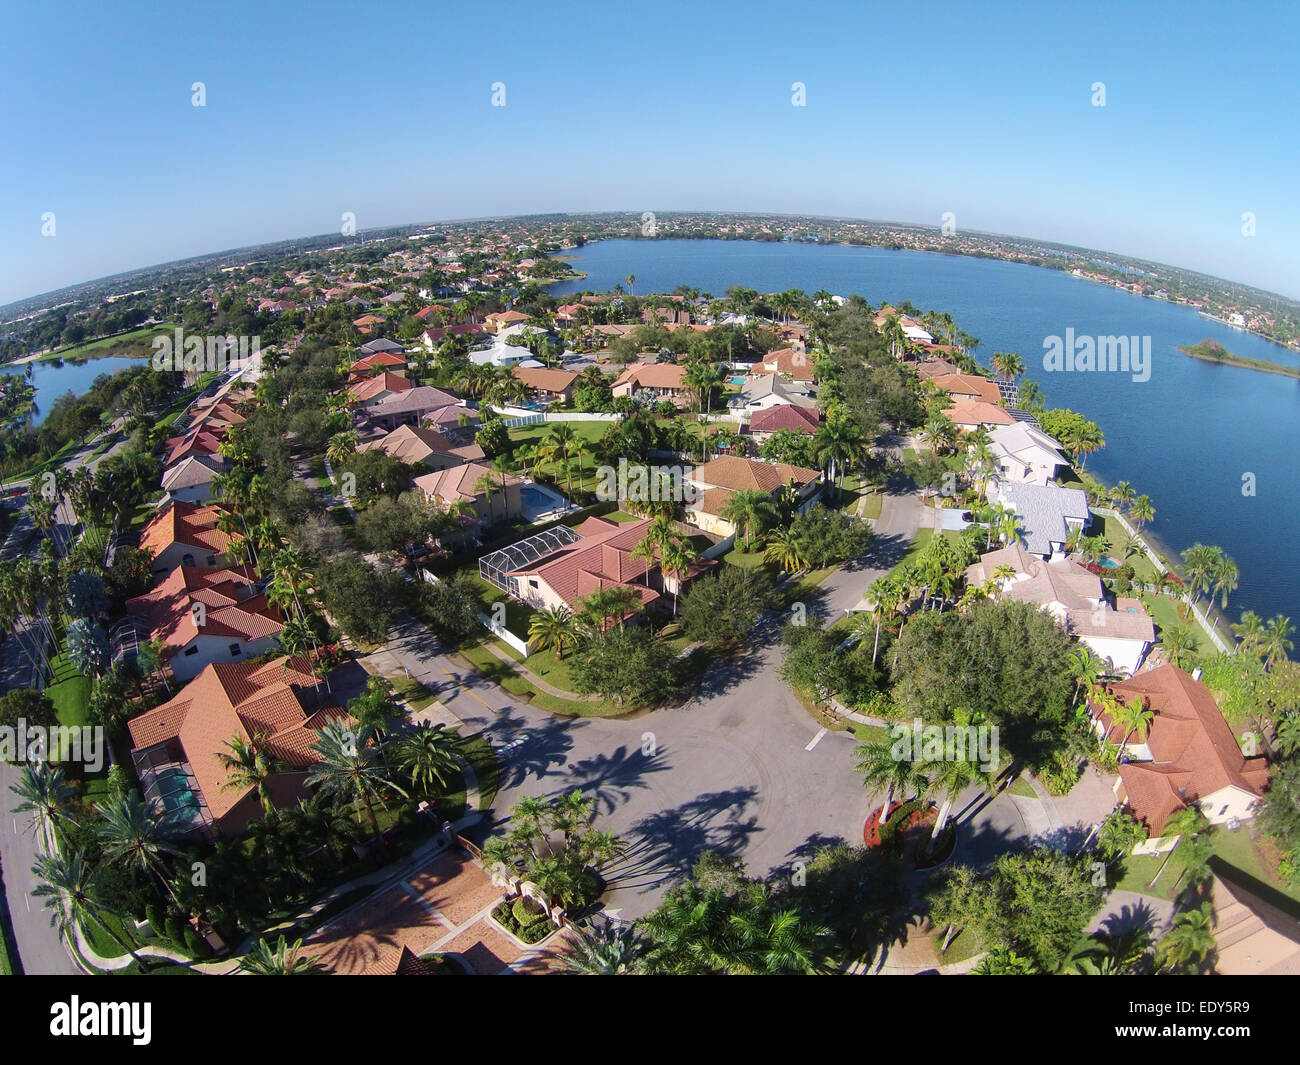 Suburban waterfront neighborhood in Florida seen in aerial view Stock Photo